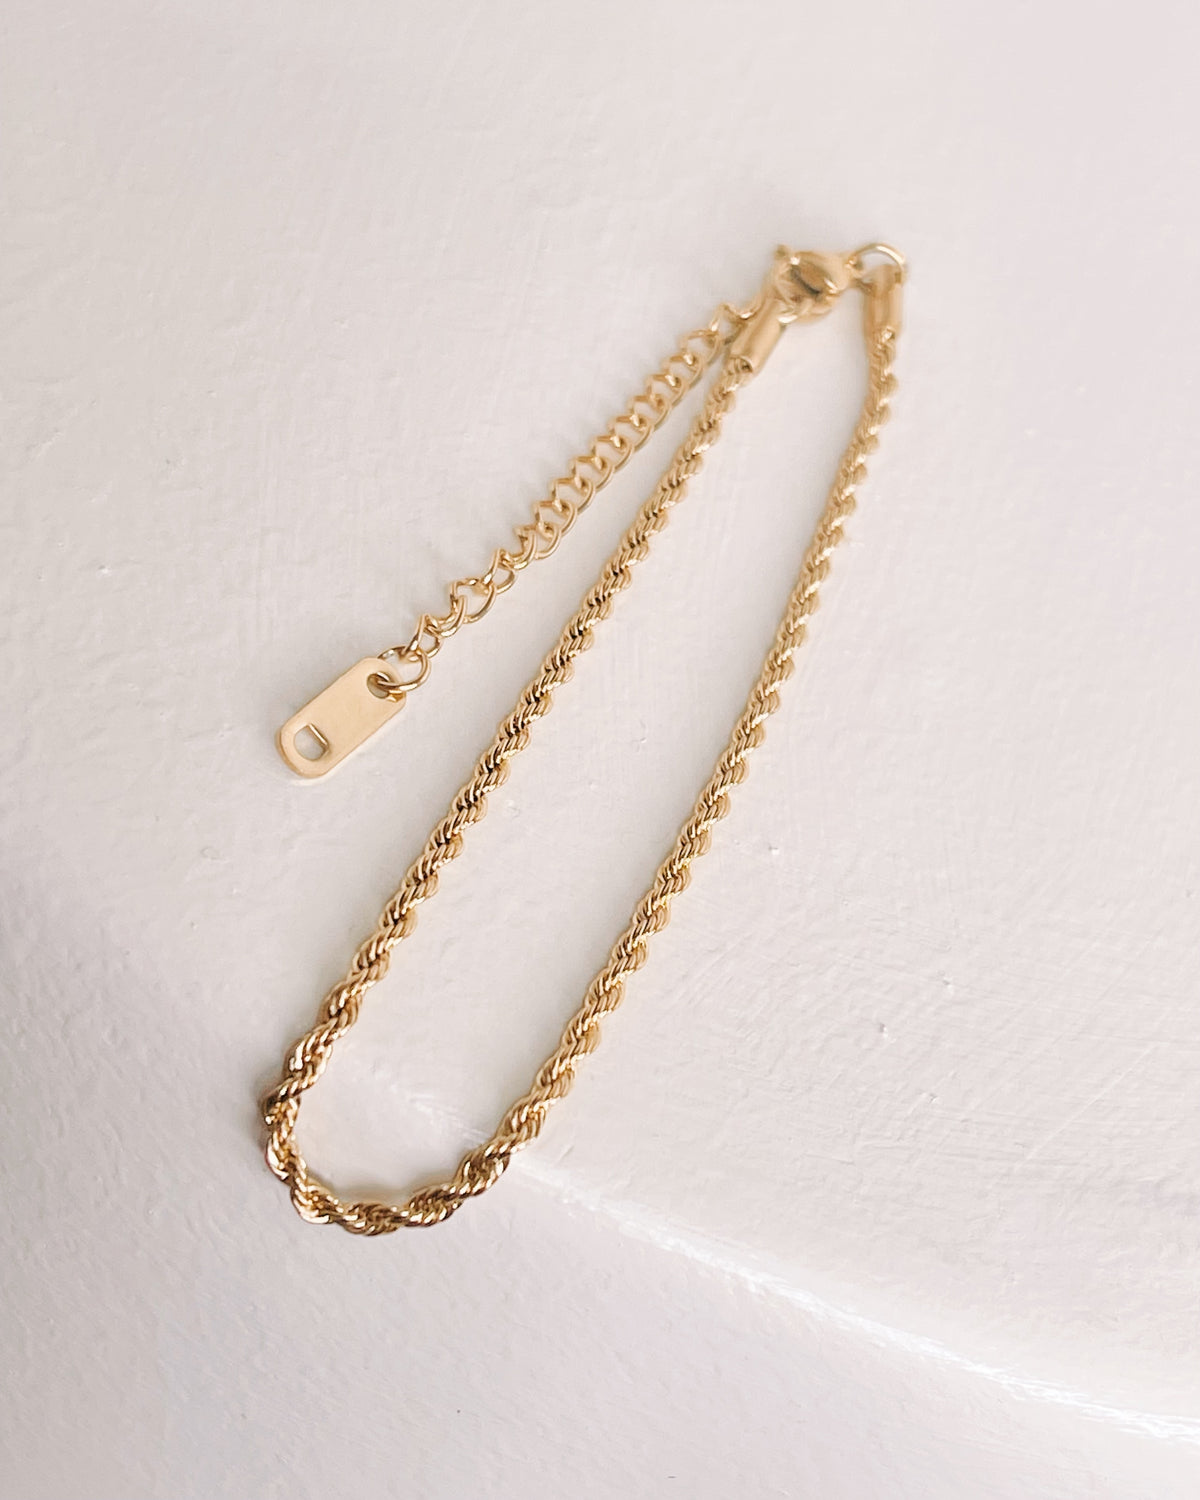 Alondra Gold Rope Chain Bracelet / Anklet